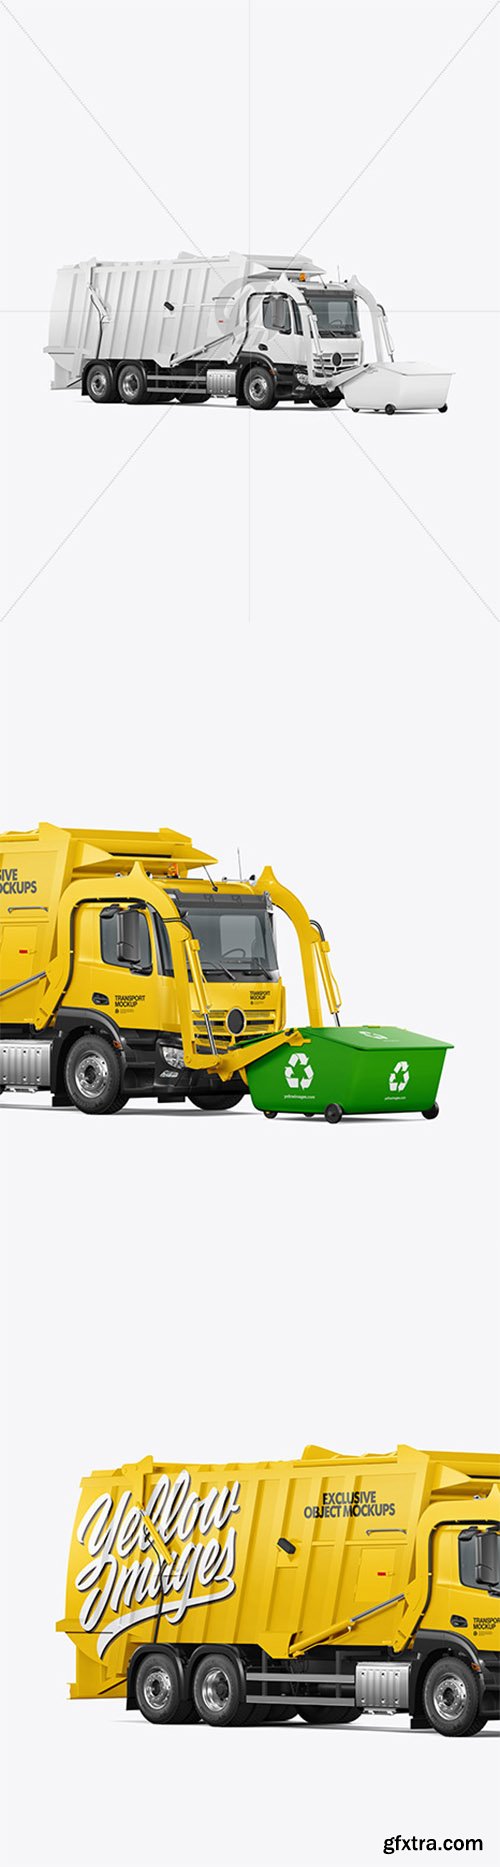 Download Garbage Truck Mockup - Half Side View 82240 » GFxtra